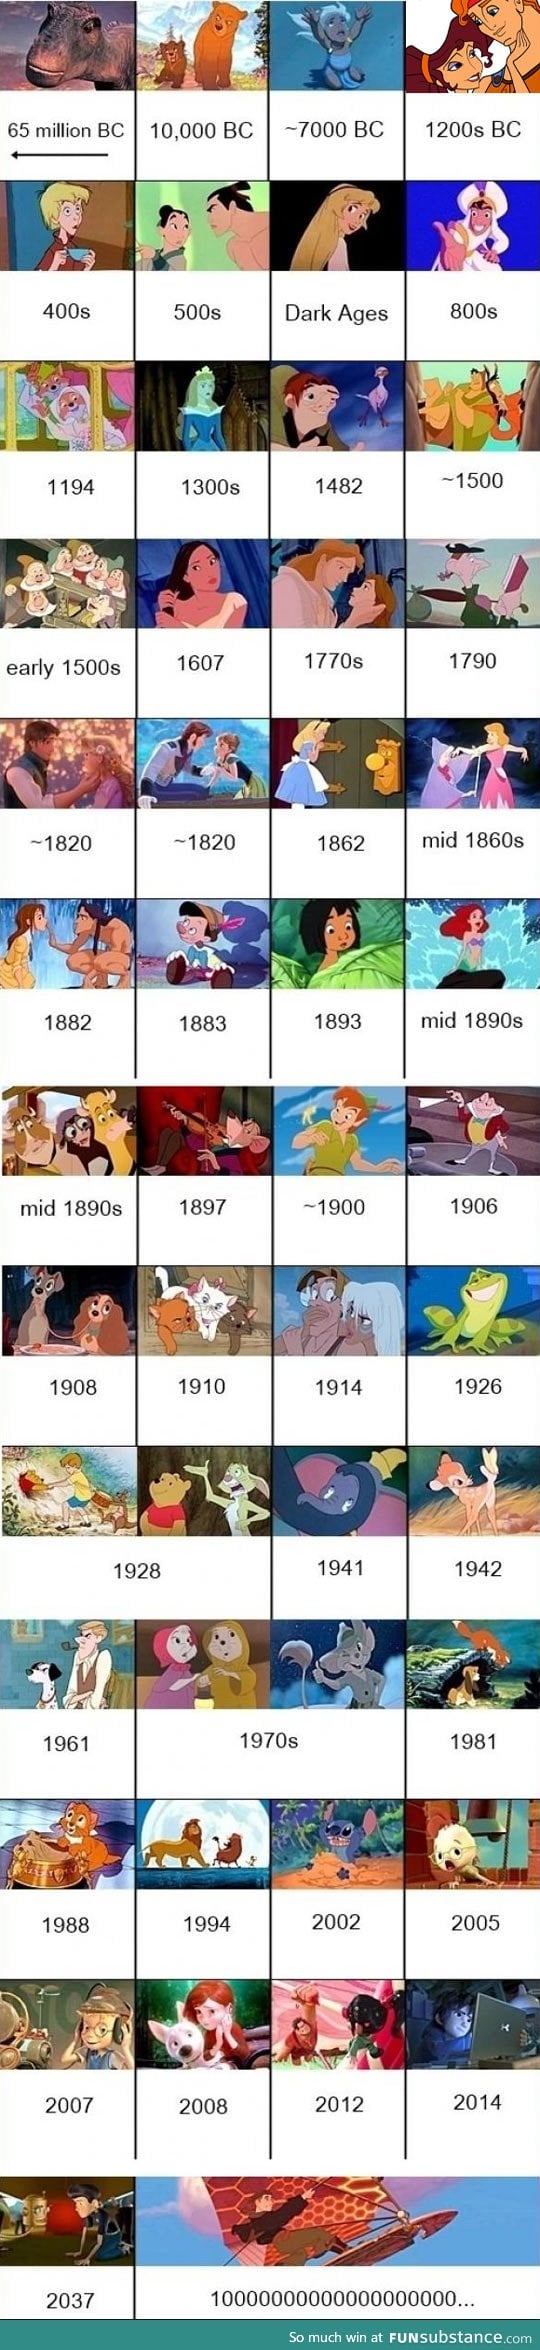 Disney movies chronology